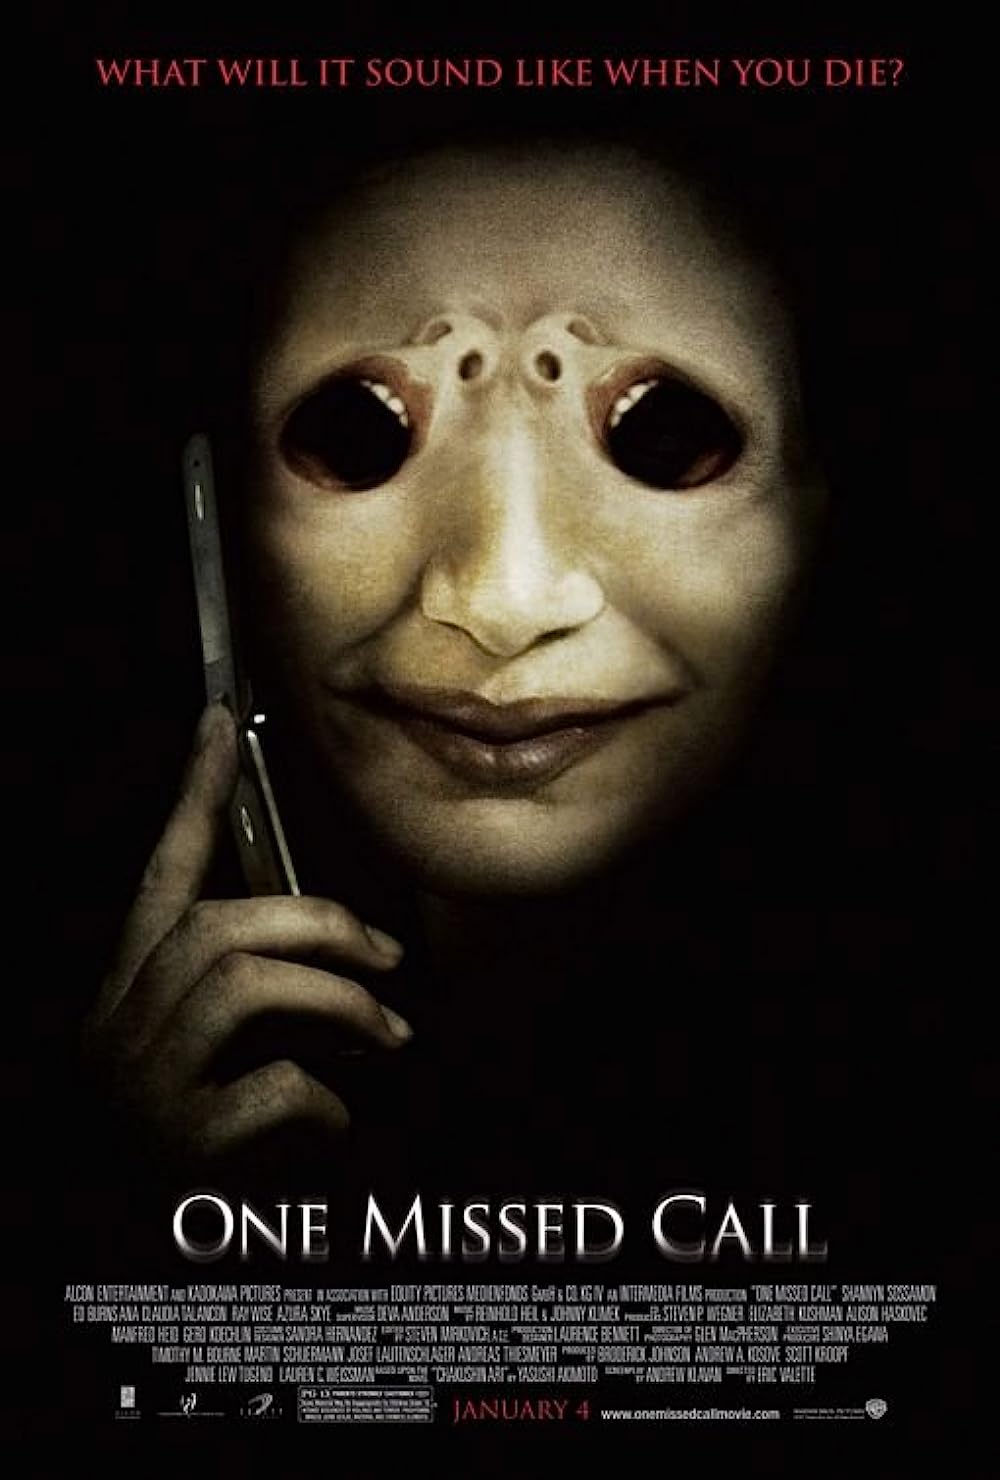 FULL MOVIE: One Missed Call (2008) [Horror]